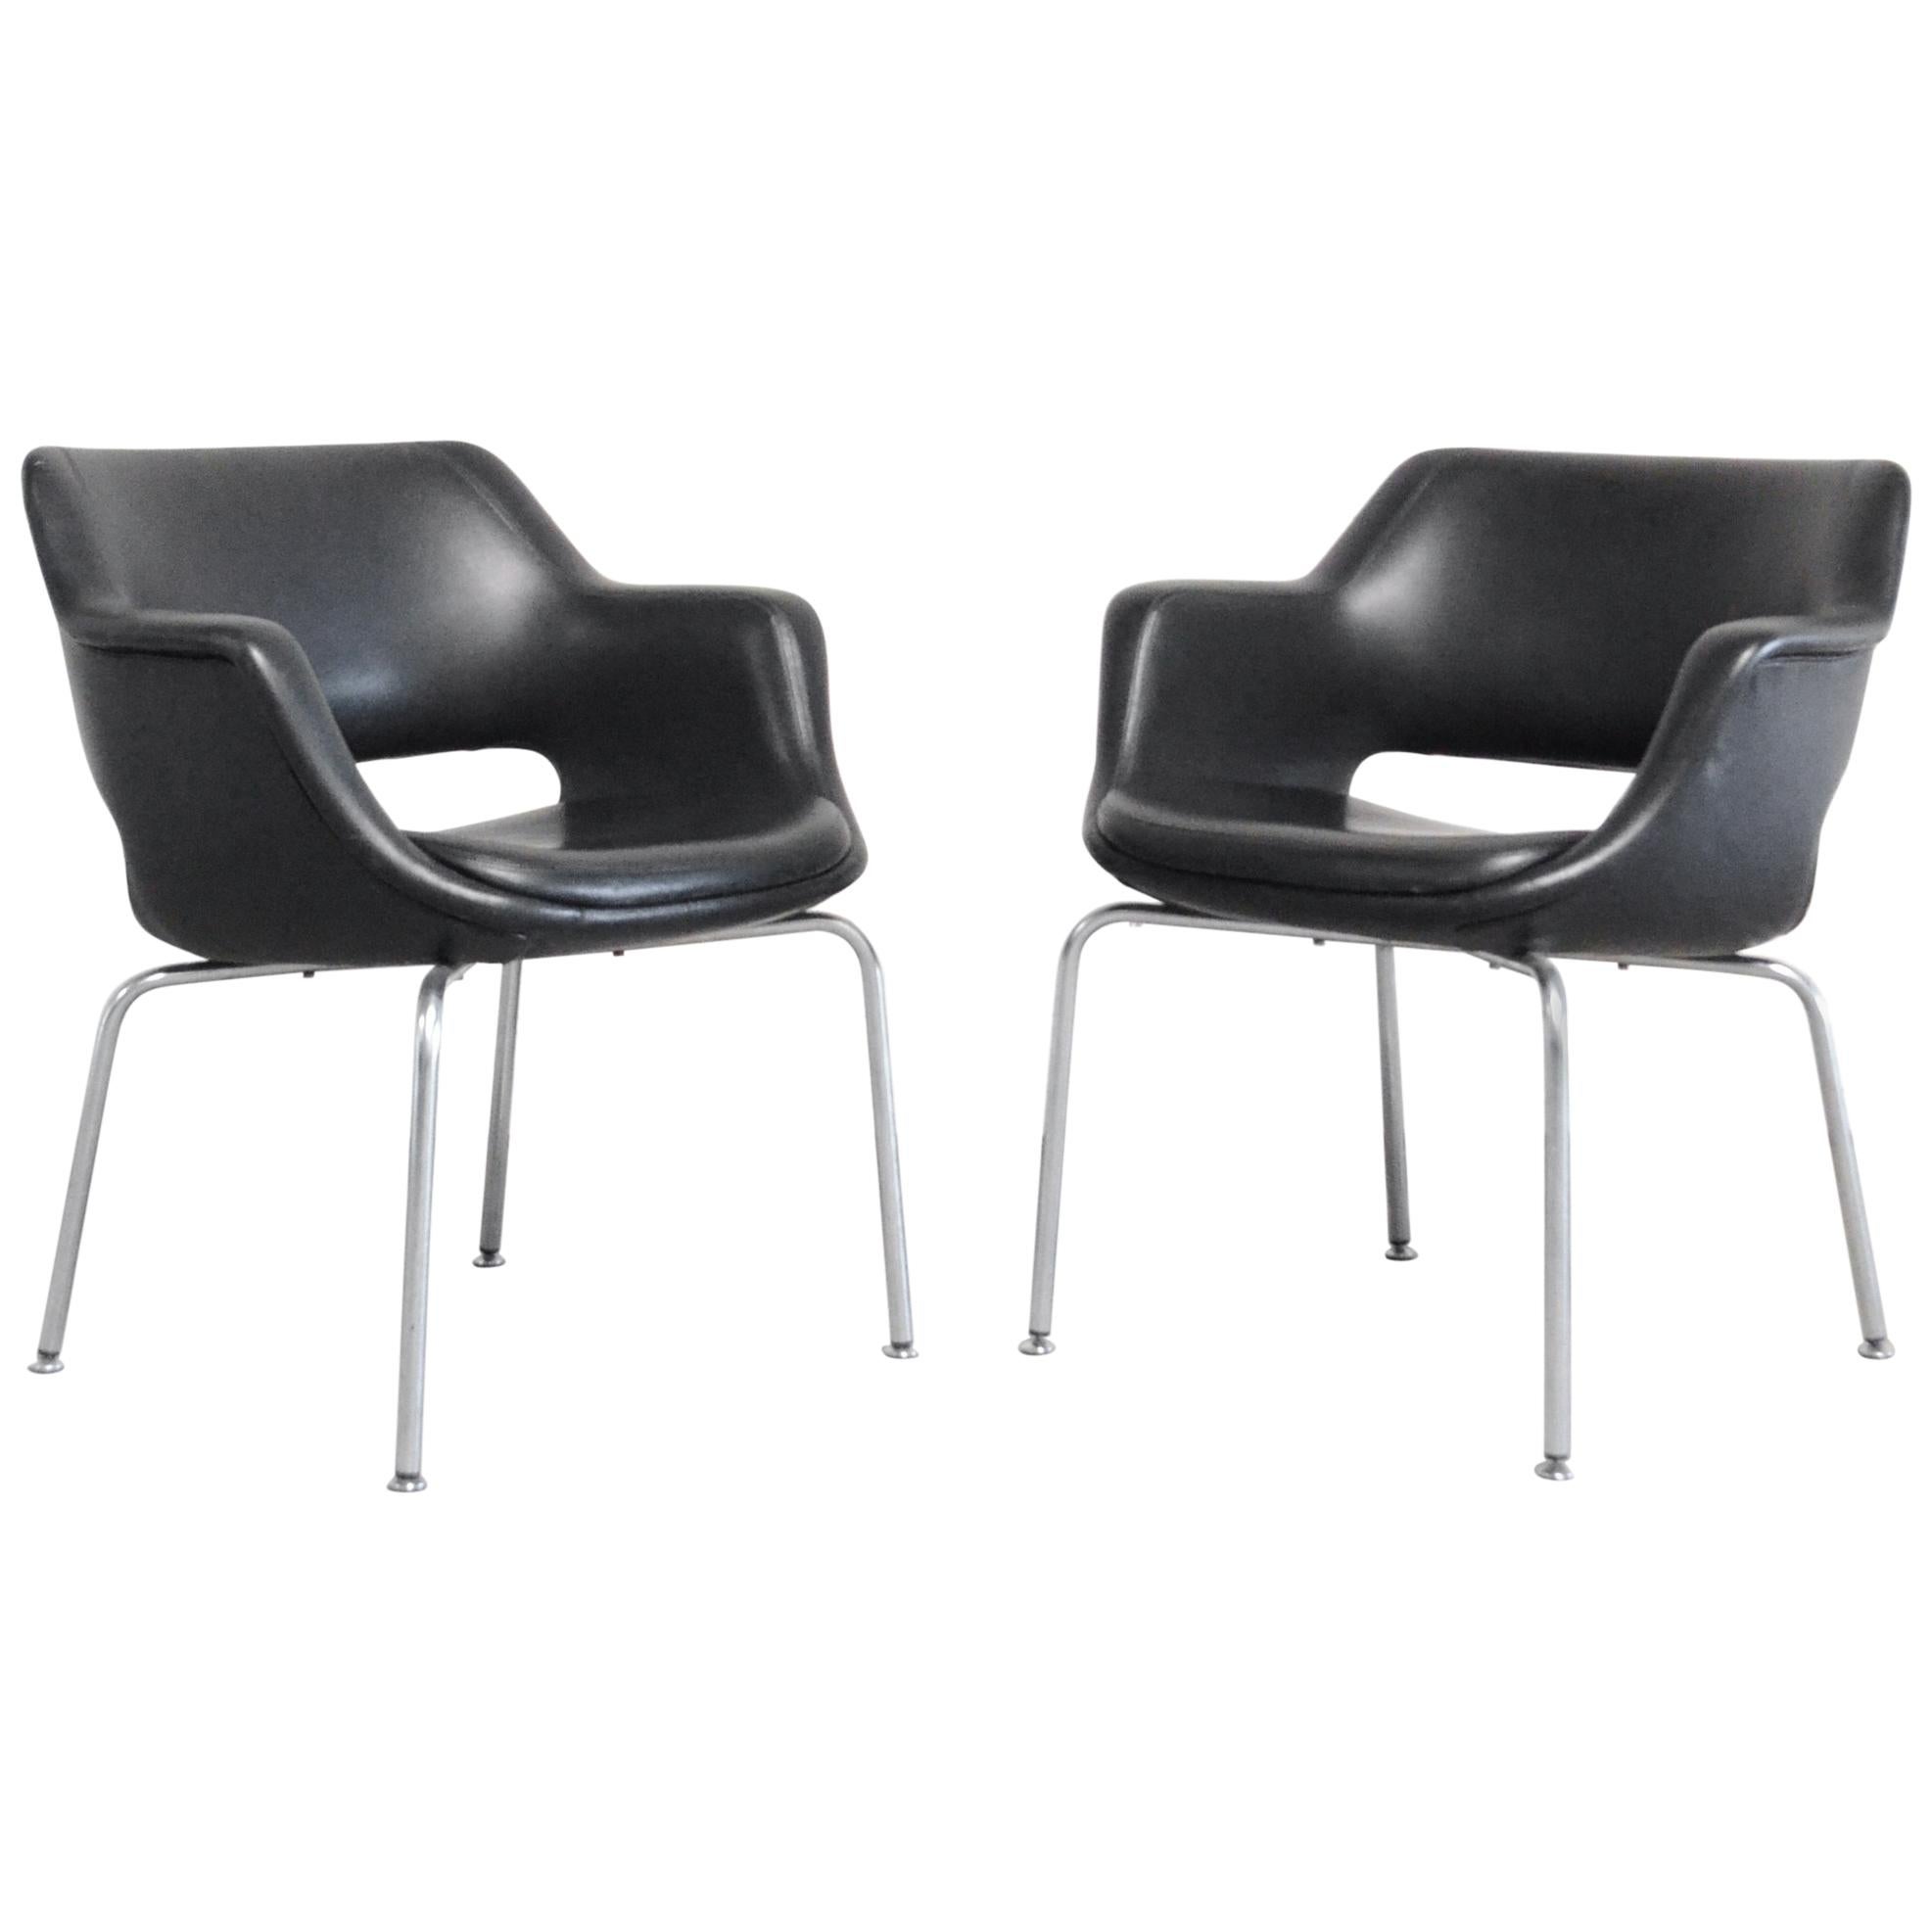 Olli Mannermaa Pair of Leather Kilta Chair by Eugen Schmidt & Cassina Martela